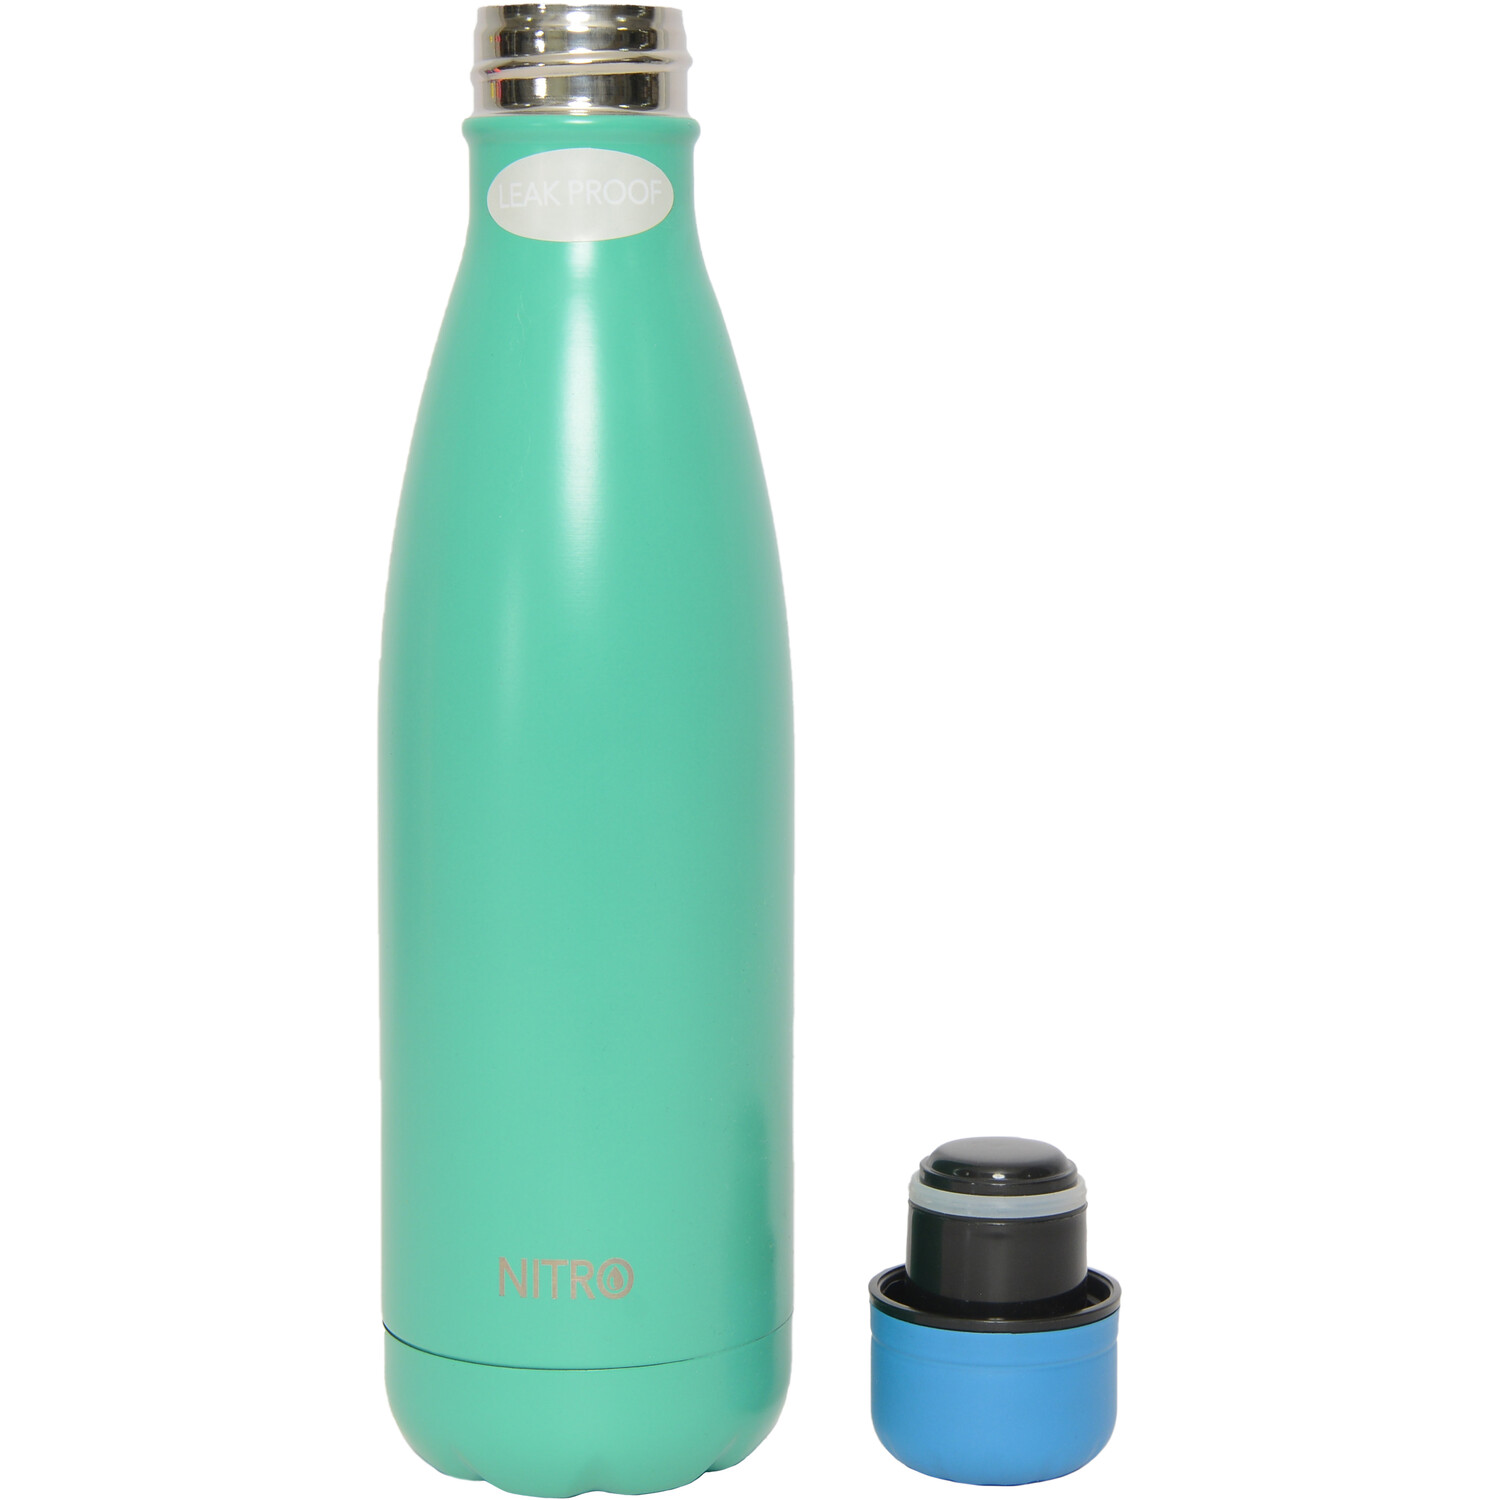 Nitro Neon Blue/Green Stainless Steel Bottle Image 4